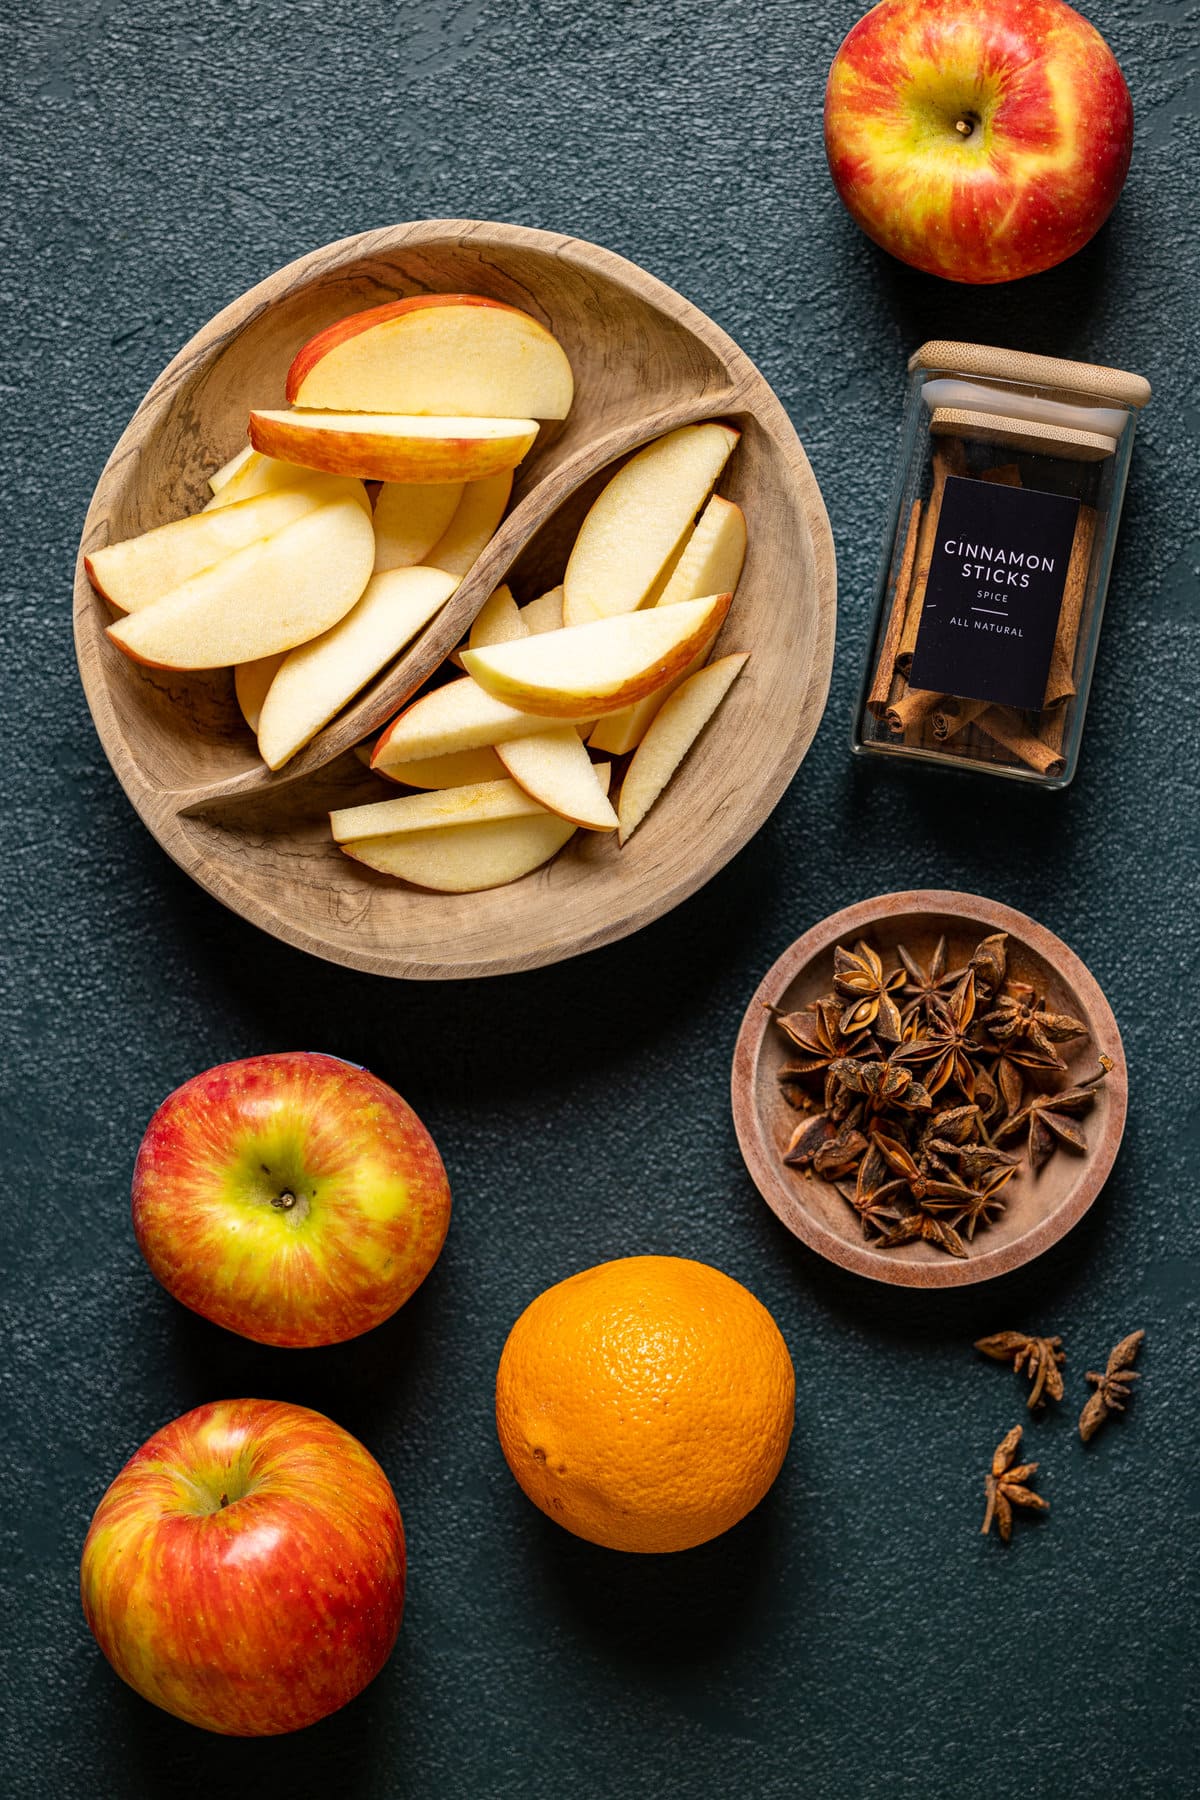 Ingredients for an Apple Cider Mocktail including cinnamon sticks, oranges, and apples